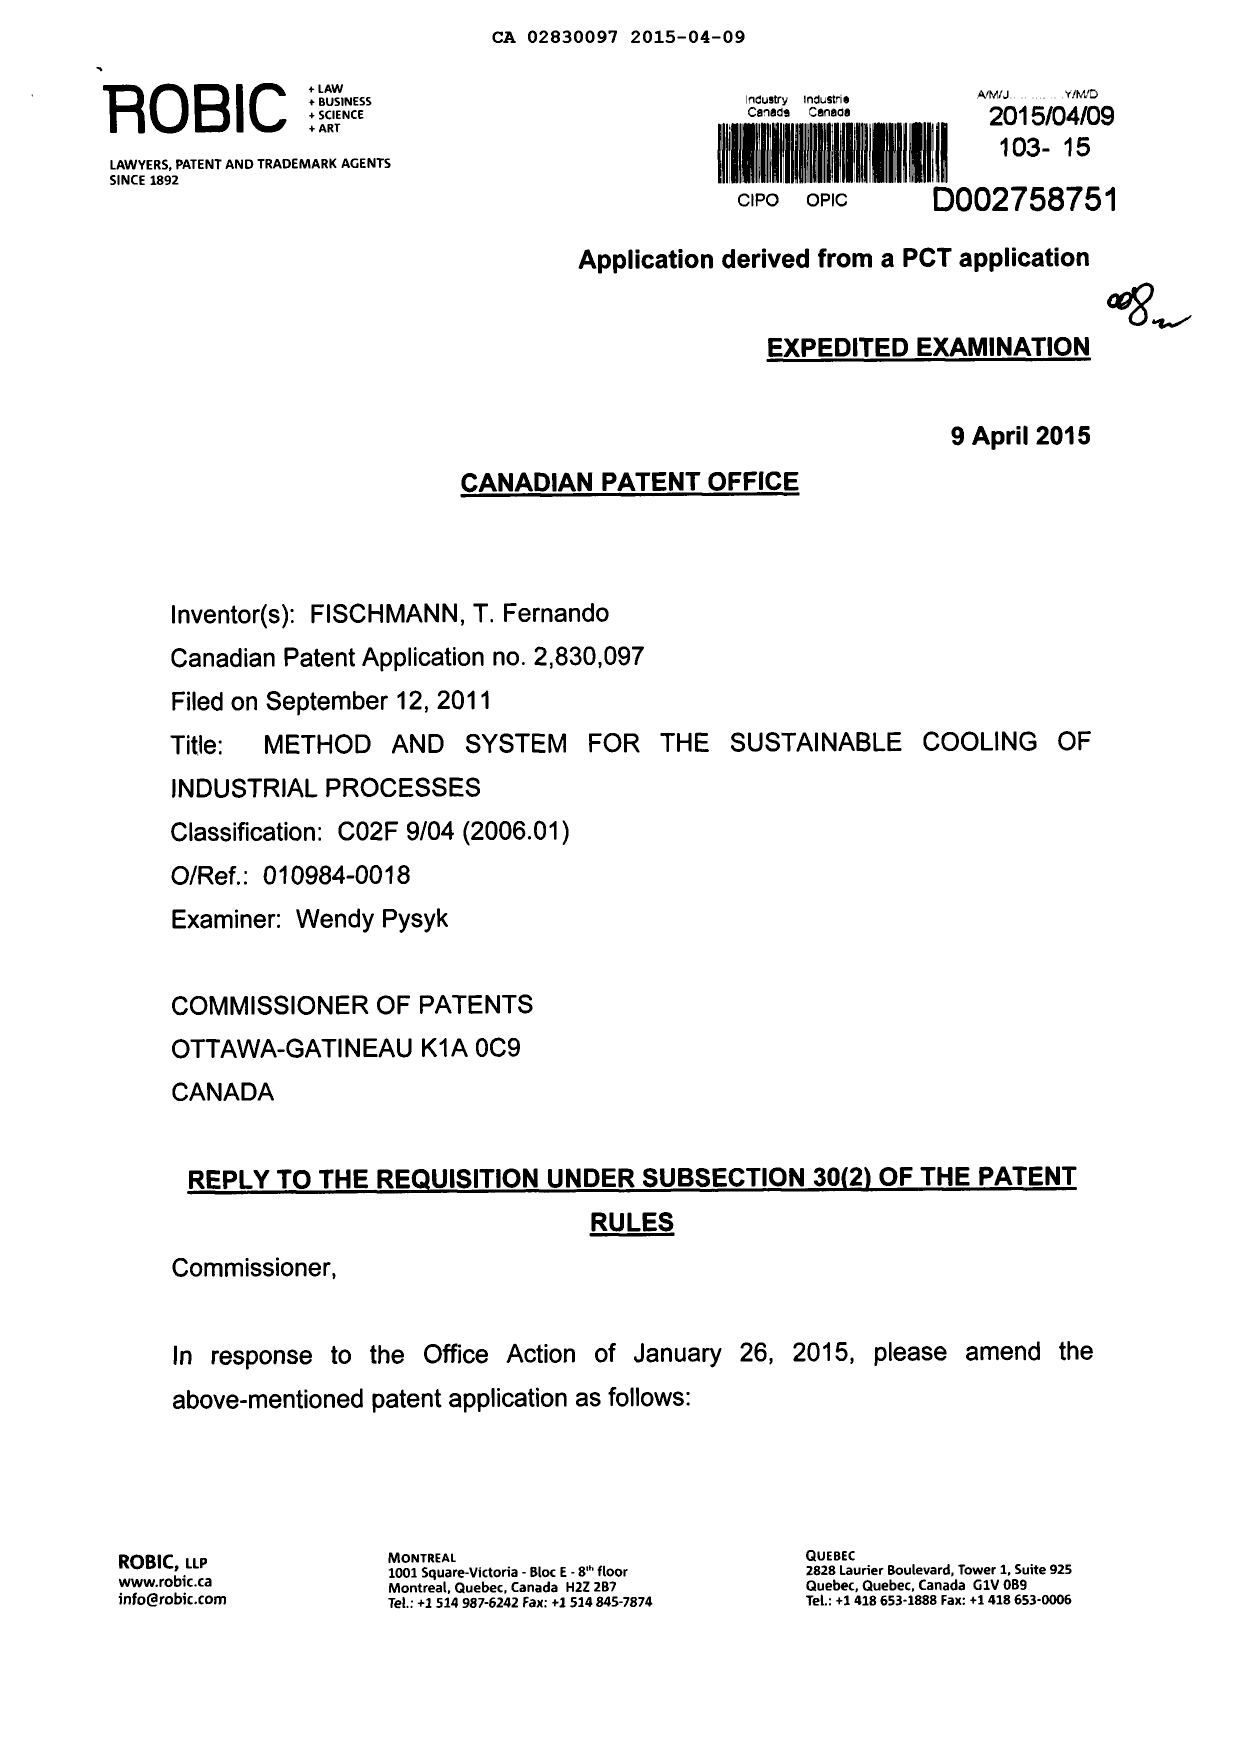 Canadian Patent Document 2830097. Prosecution-Amendment 20150409. Image 1 of 5